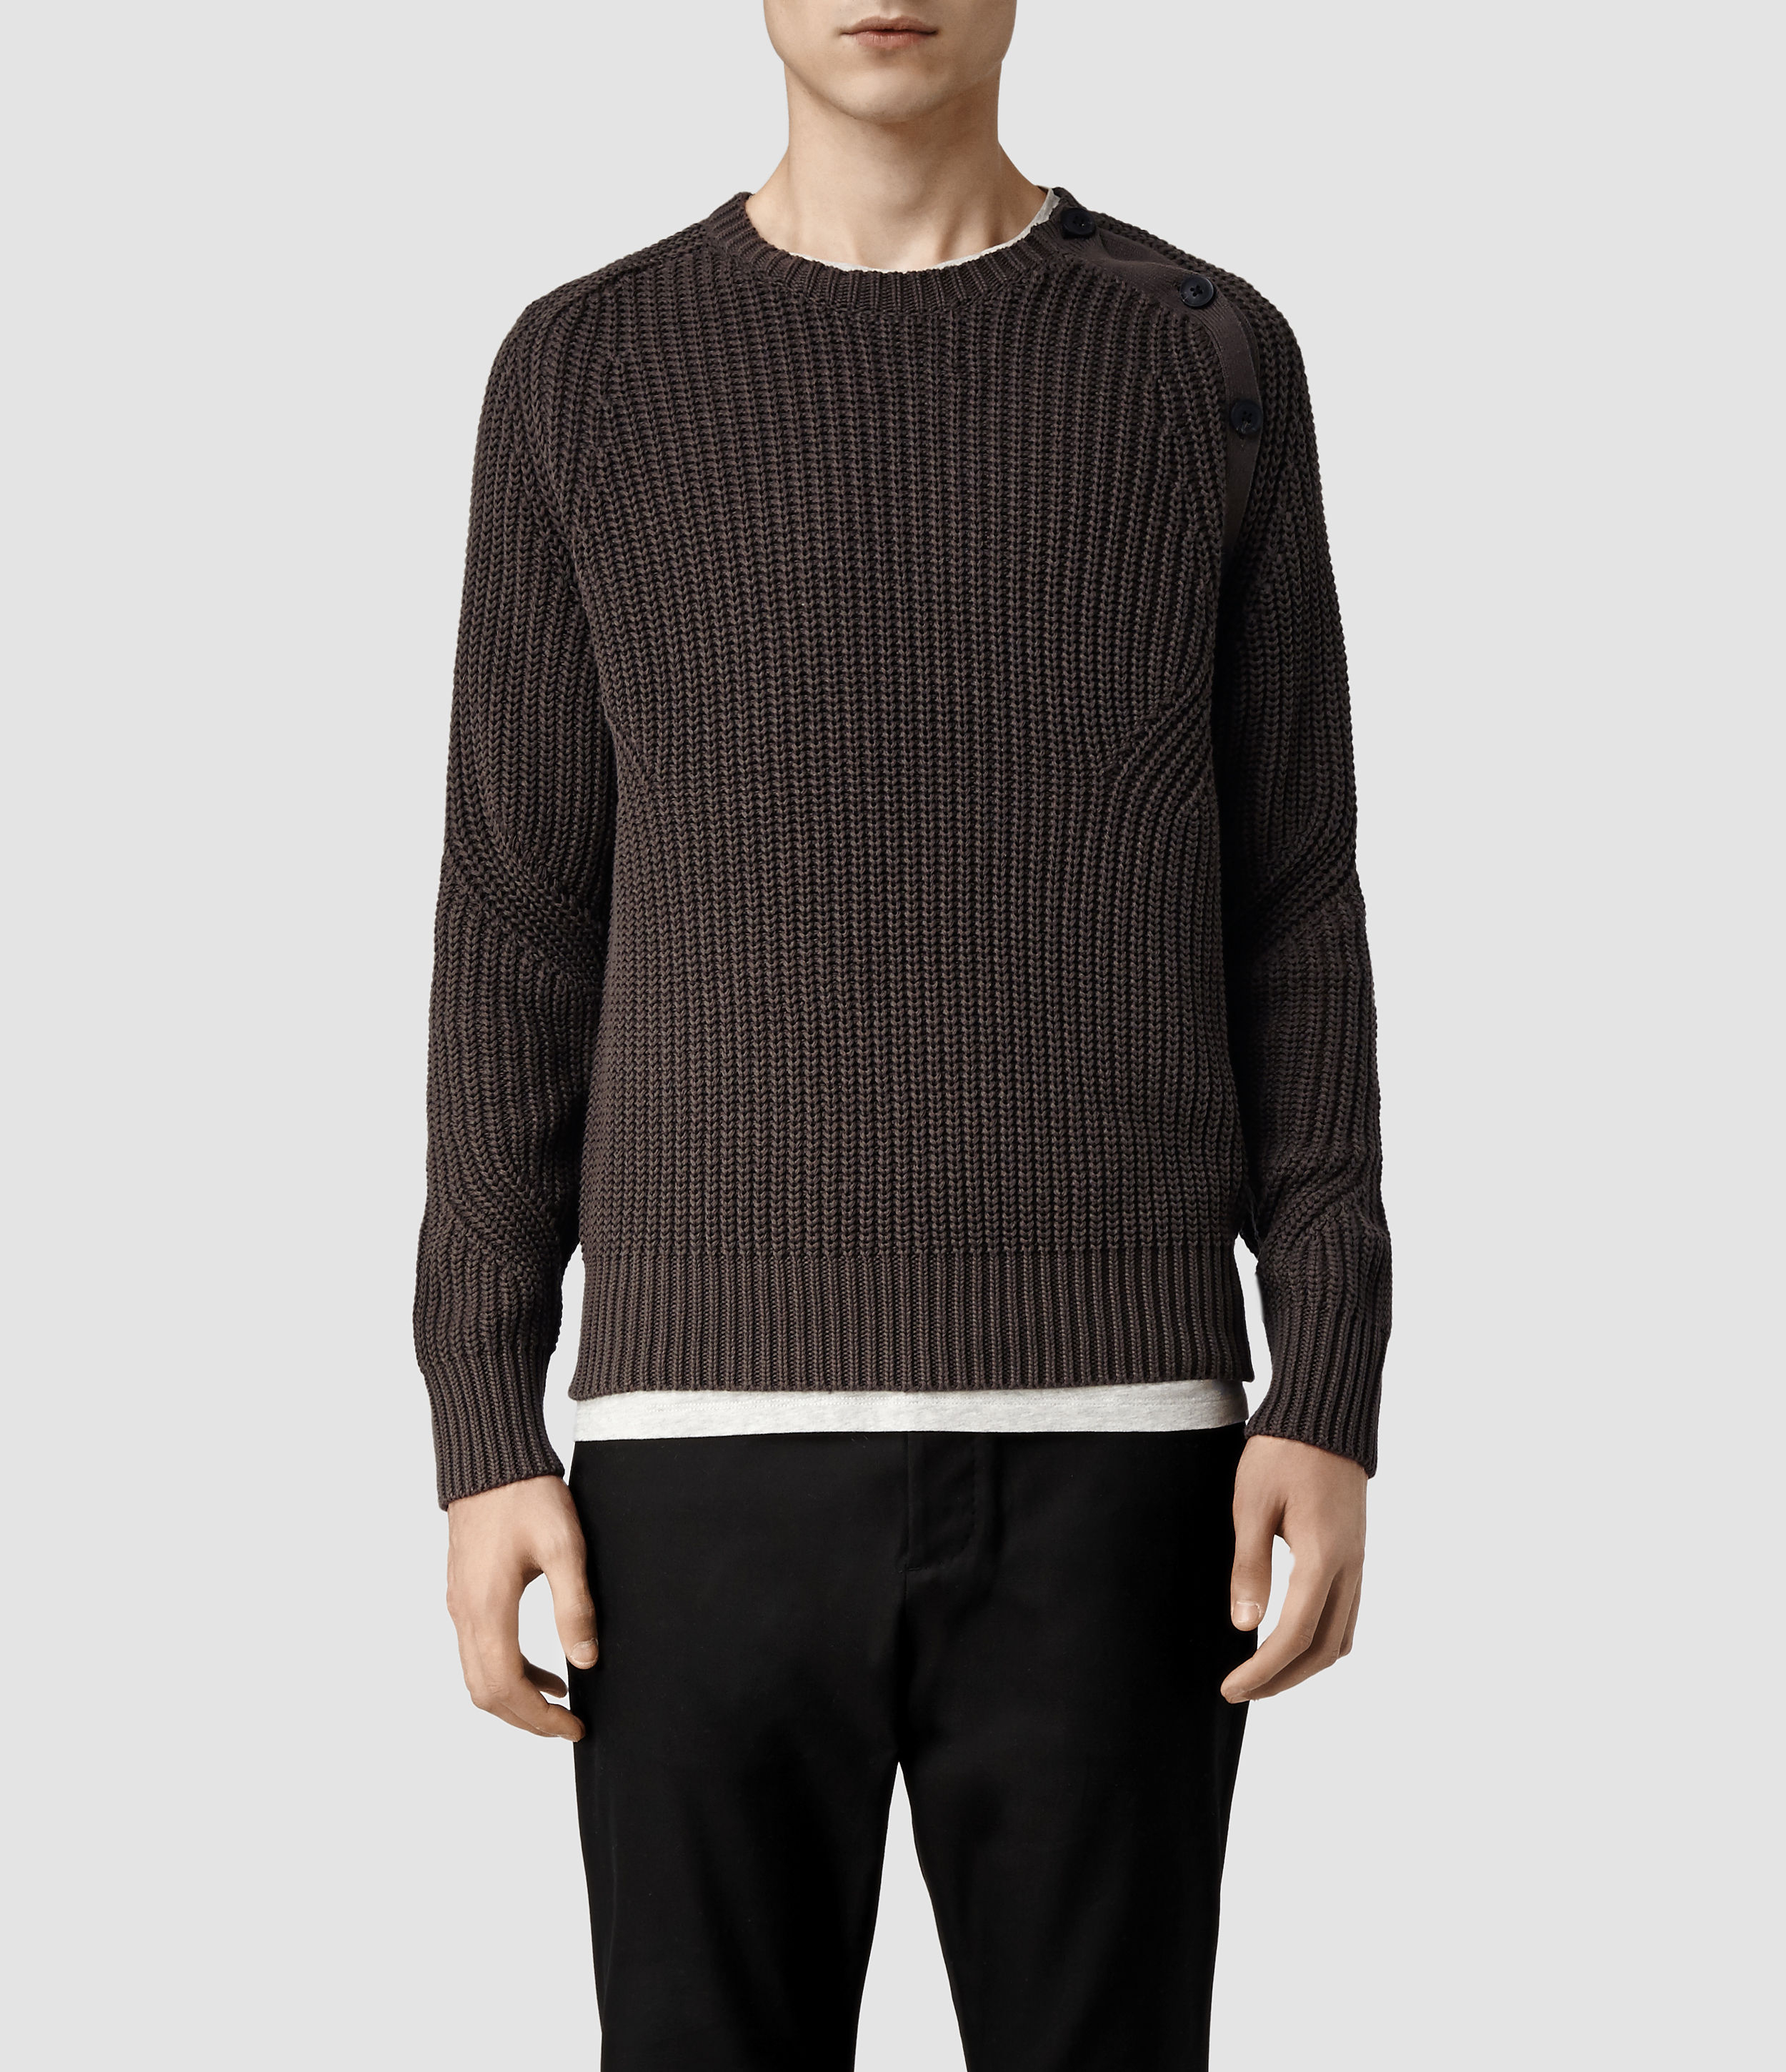 AllSaints Moat Buttoned Crew Sweater in Khaki (Gray) for Men - Lyst